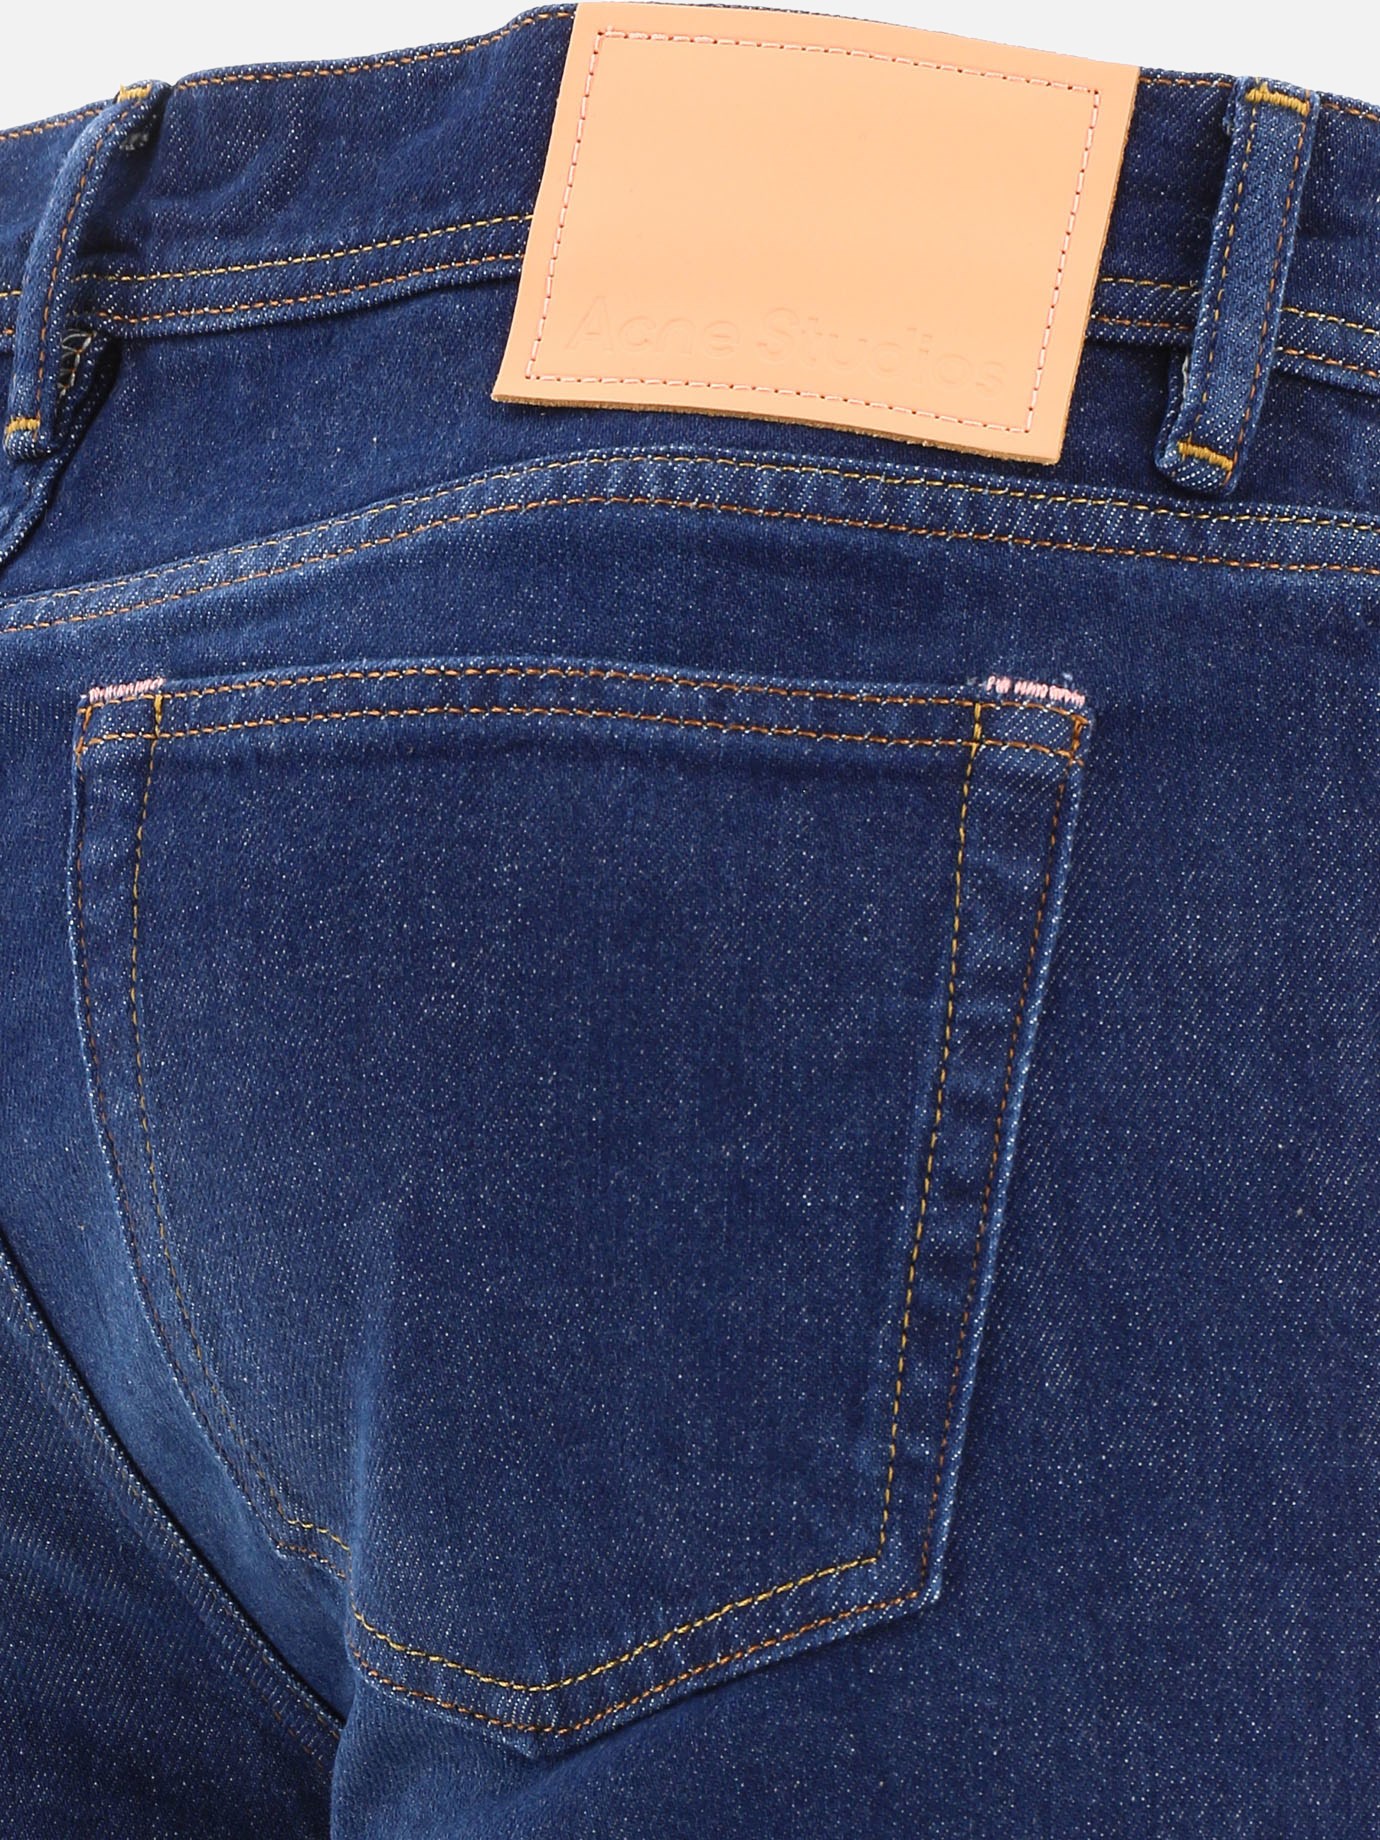 Five pocket jeans by Acne Studios